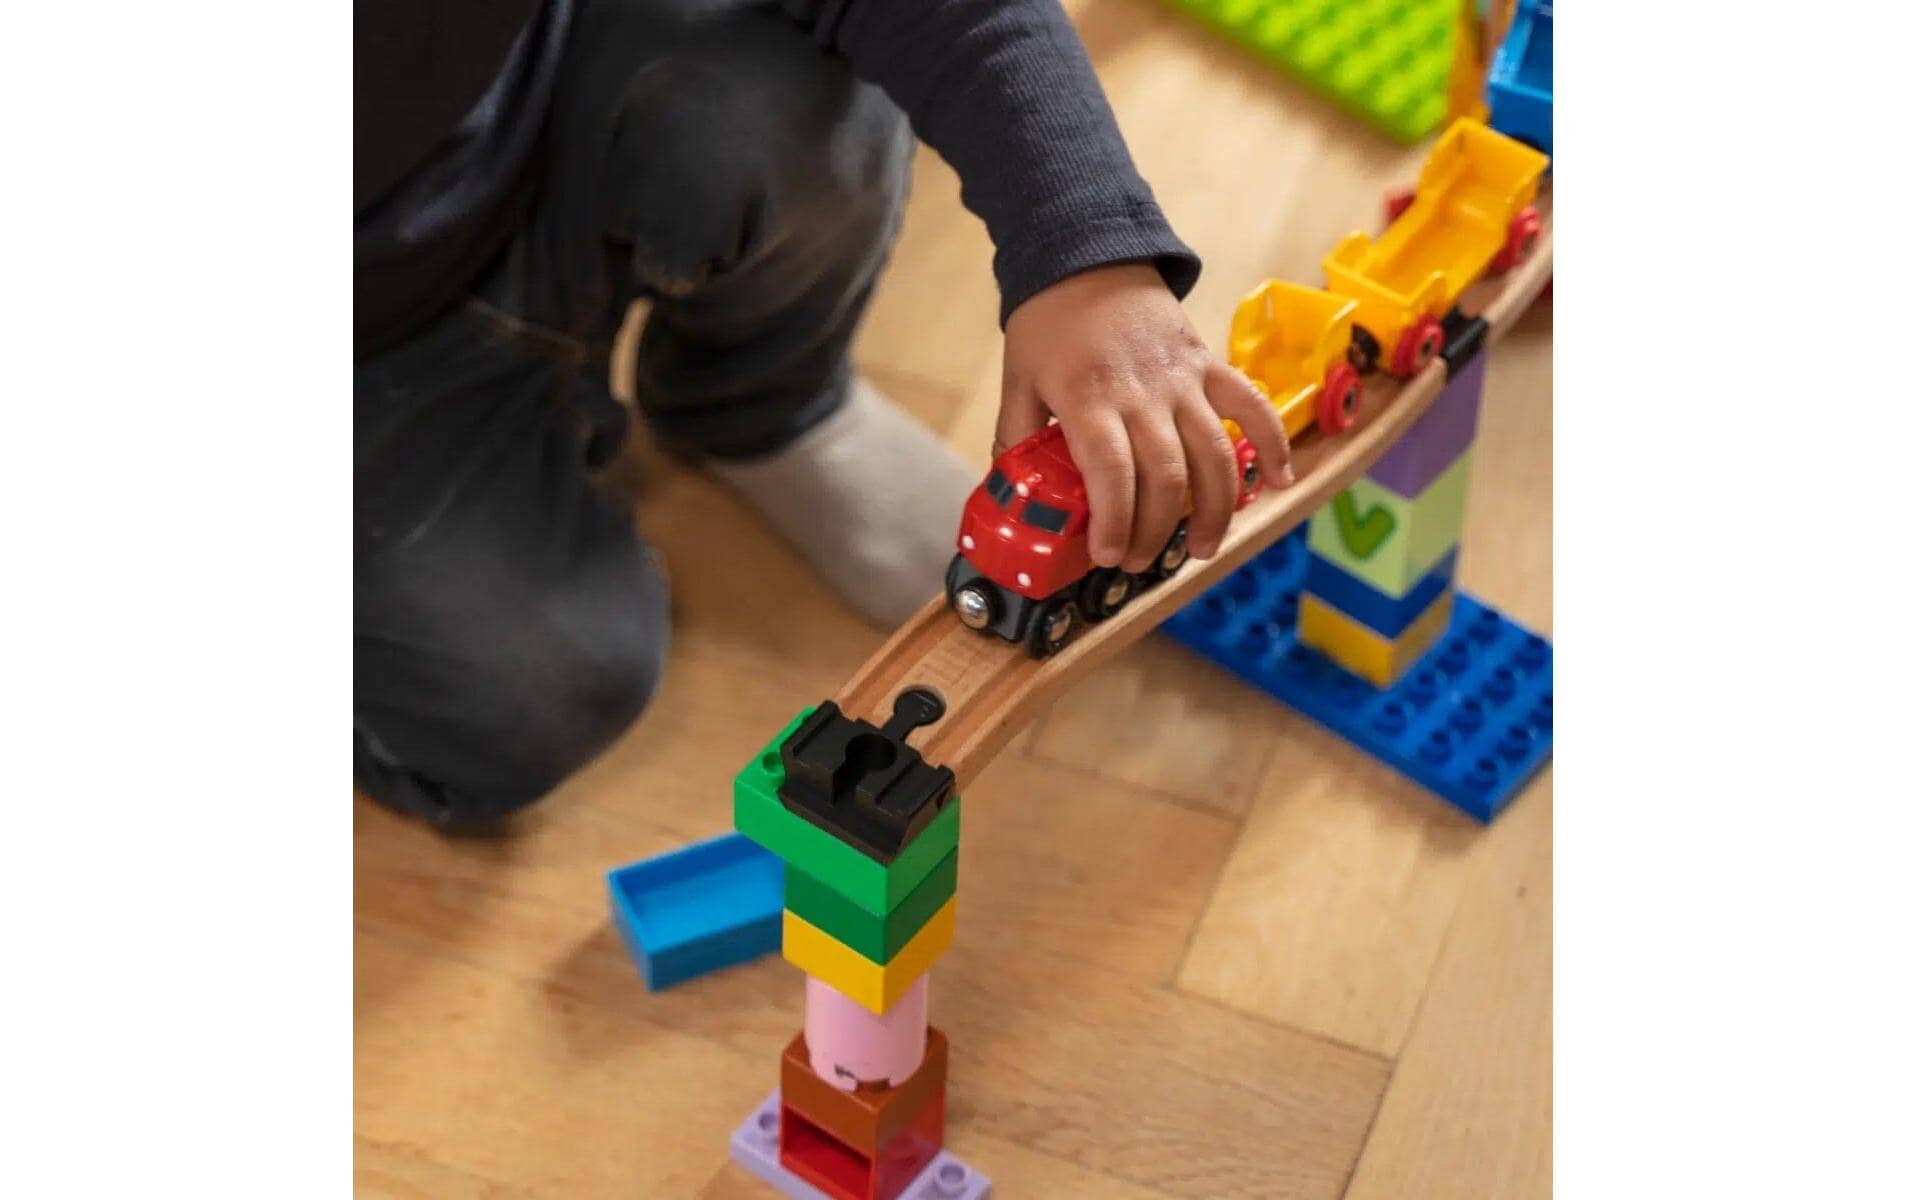 Spielzeugeisenbahn-Kreuzung »Toy2 Builder Set Small«